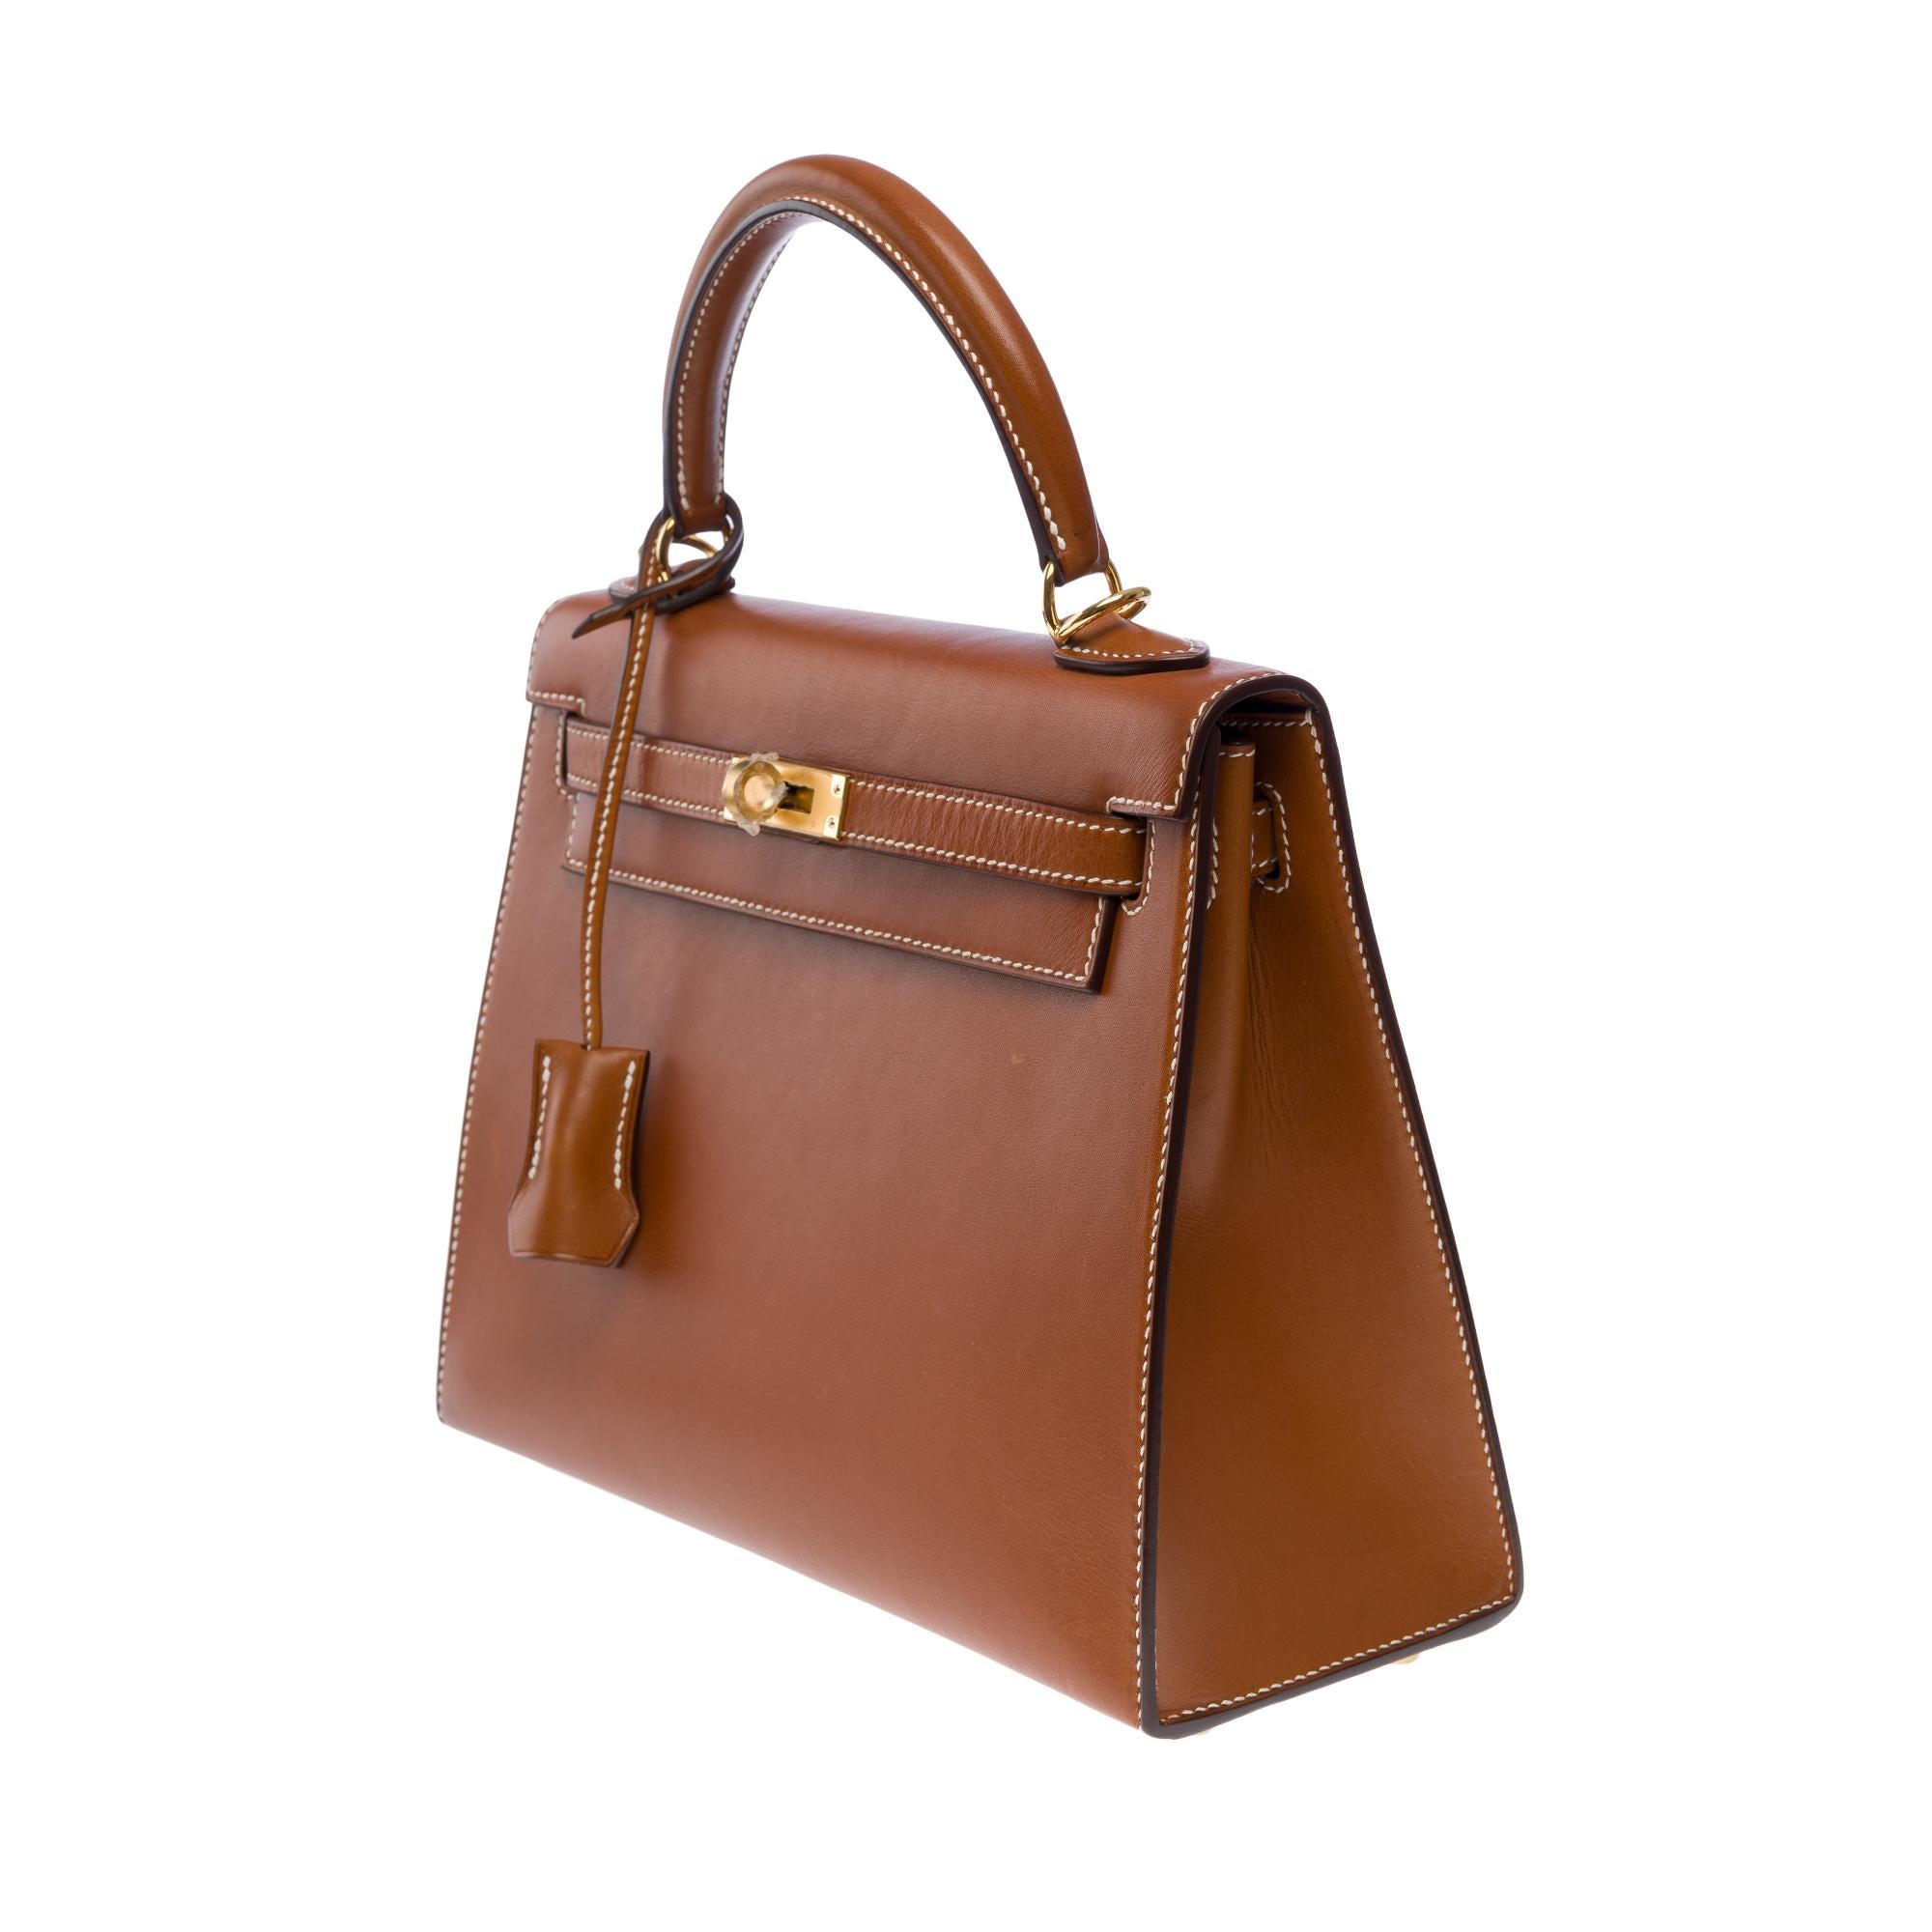 Very Rare Hermès Kelly 25 sellier handbag strap in Gold Barenia leather, GHW 1